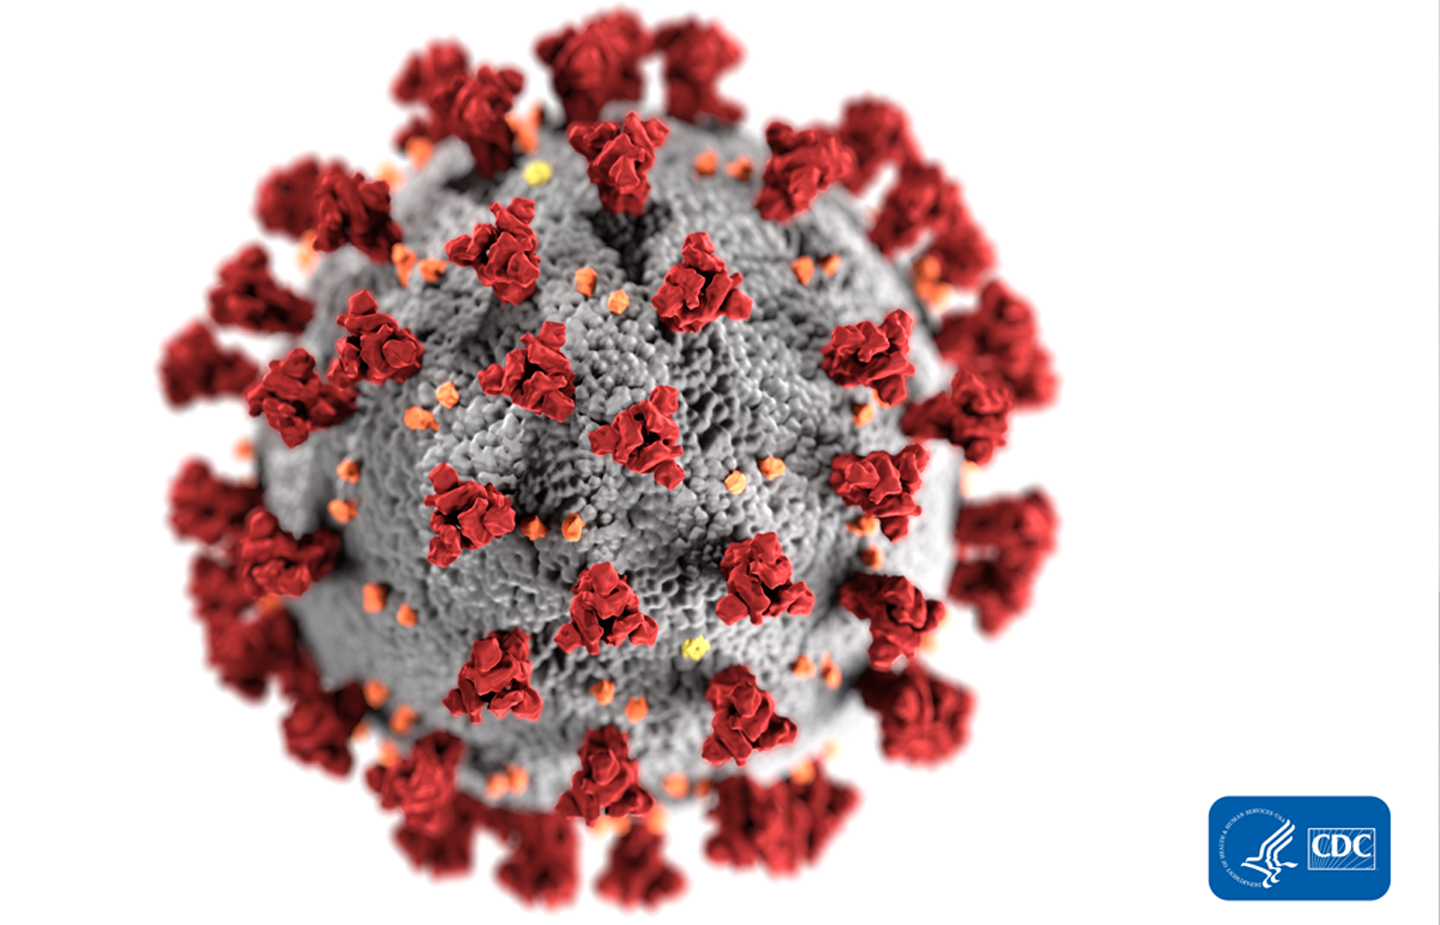 Bild på ett coronavirus i mikroskop. Foto: cdc